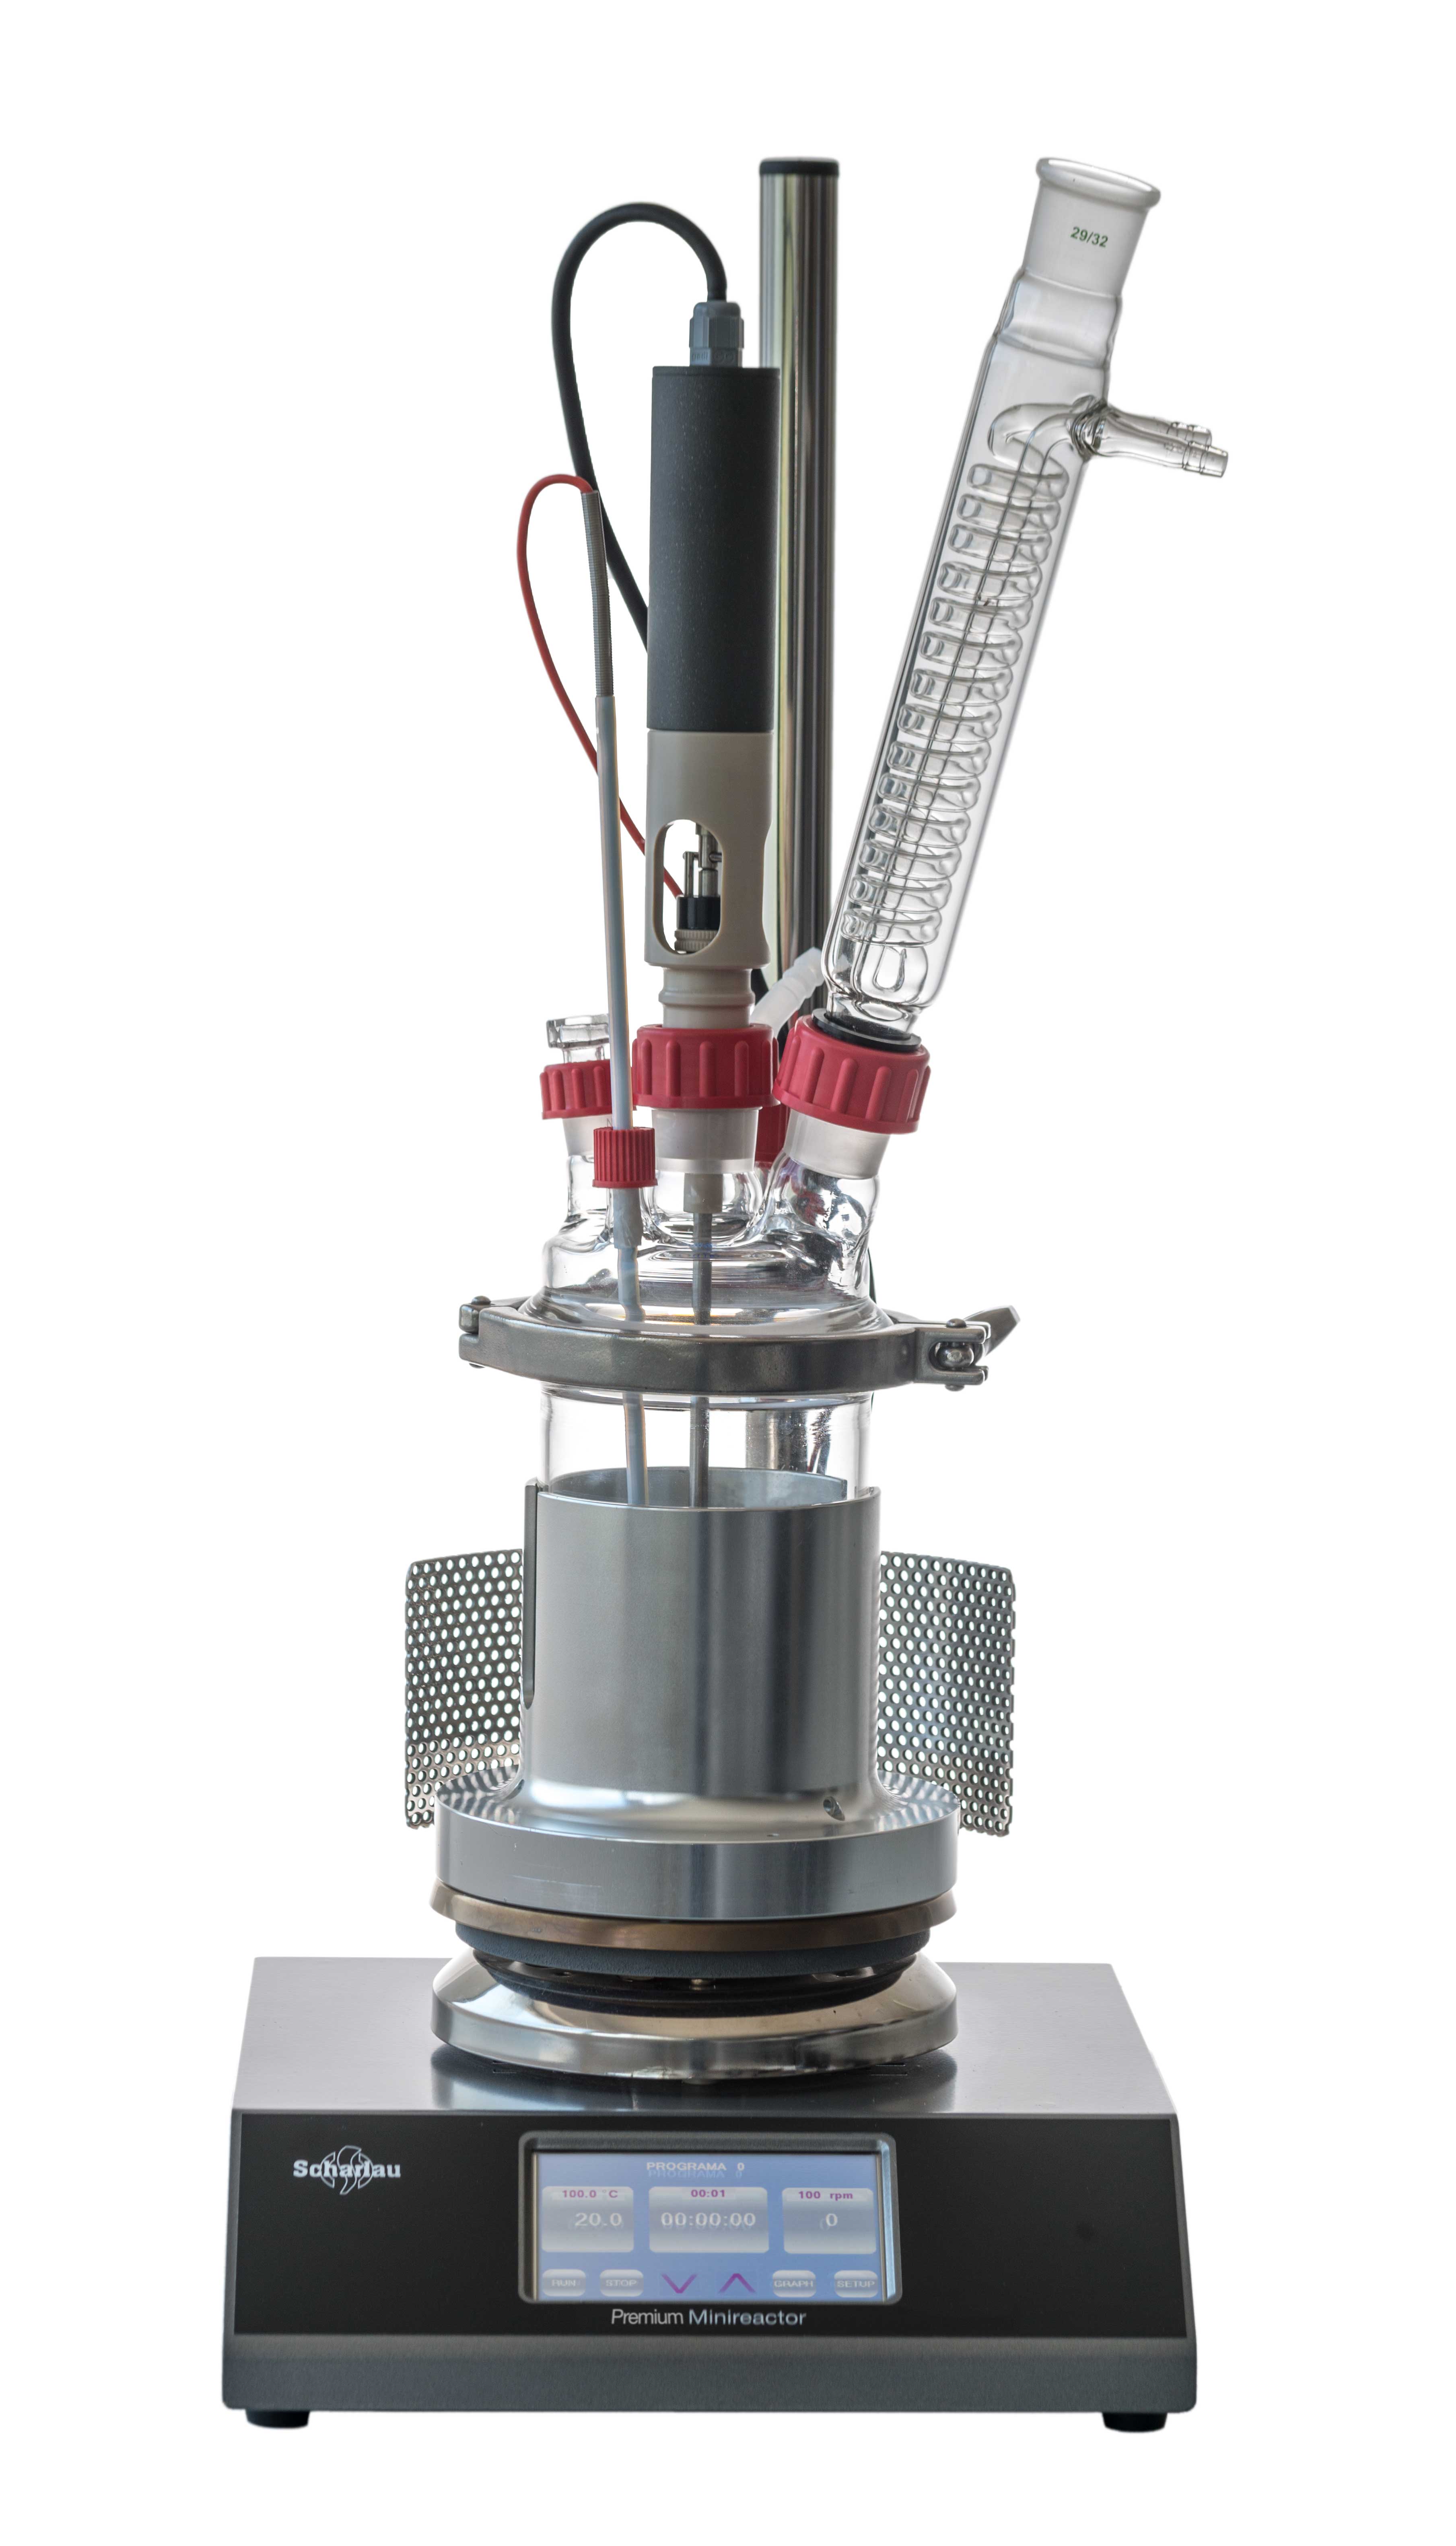 Premium minireactor with mechanical stirring and heating of 2000 ml.